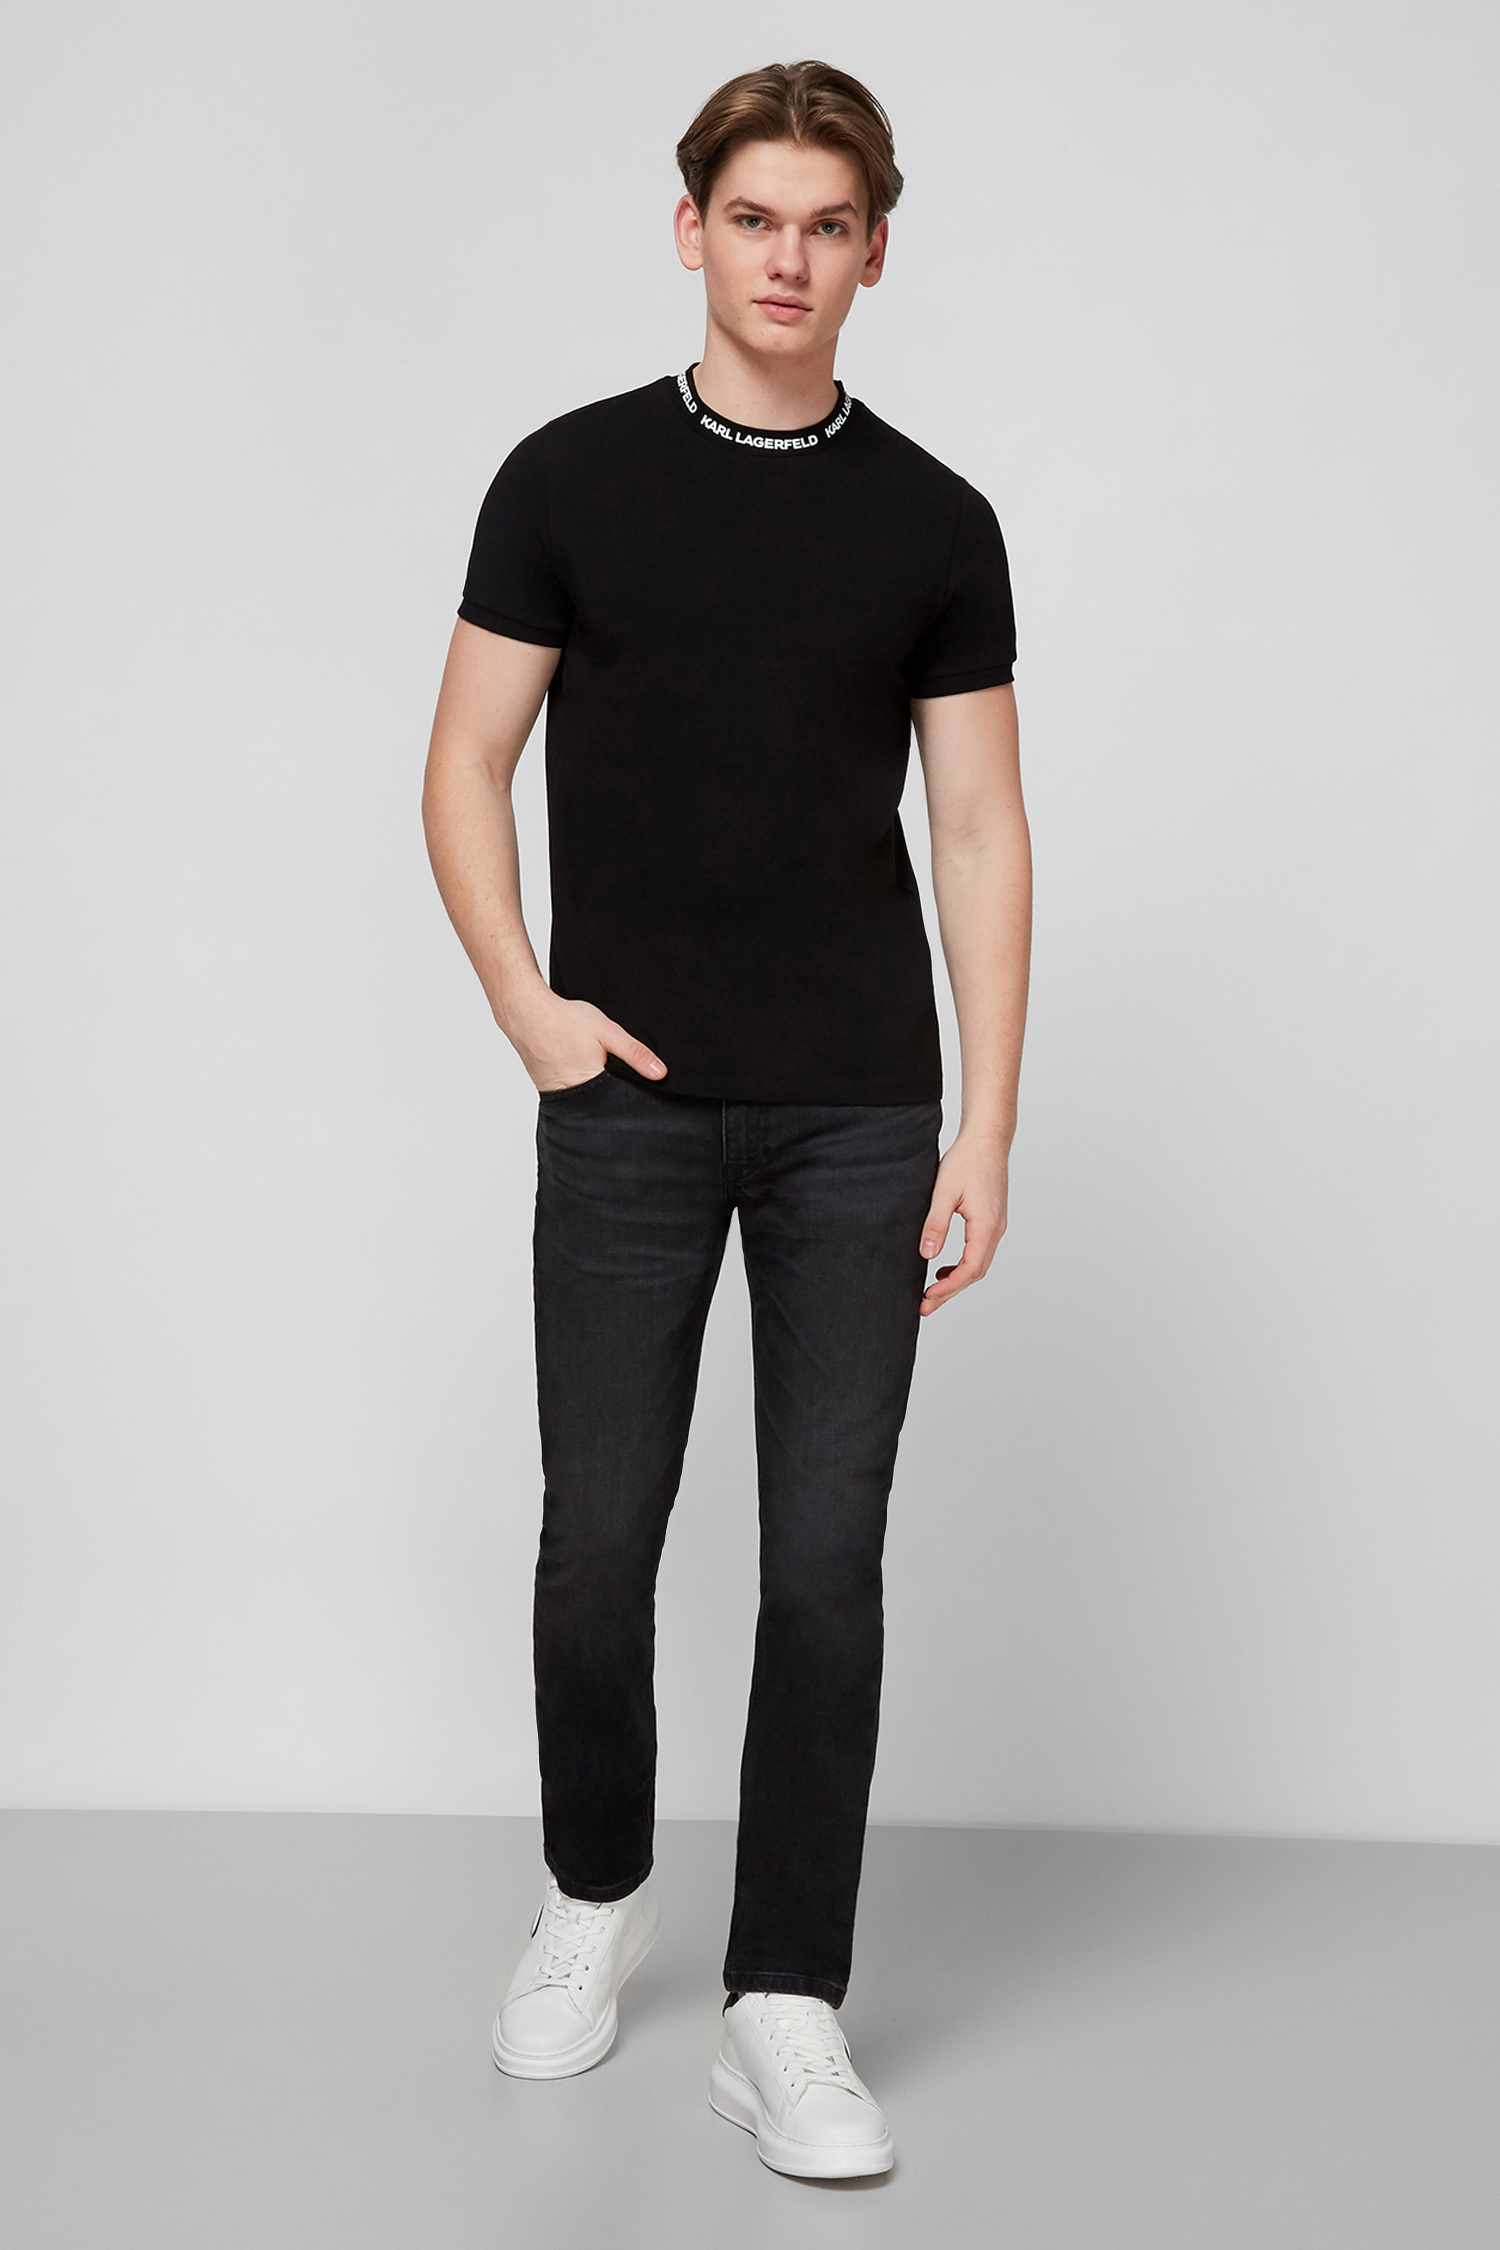 Черная футболка для парней Karl Lagerfeld 511221.755022;990